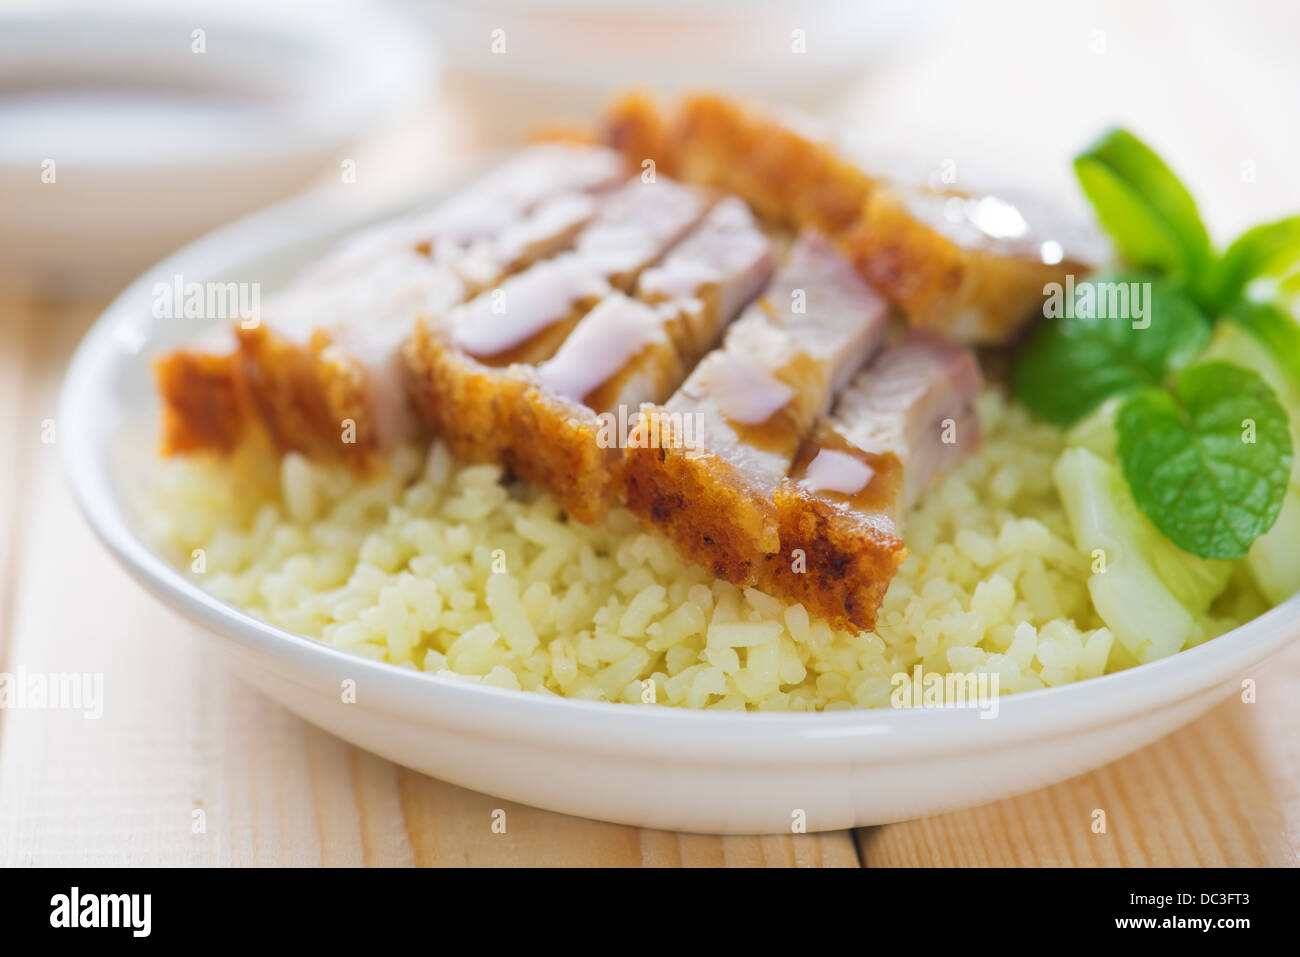 Siu Yuk - Chinese crispy roasted belly pork rice. Hong Kong cuisine. Stock Photo